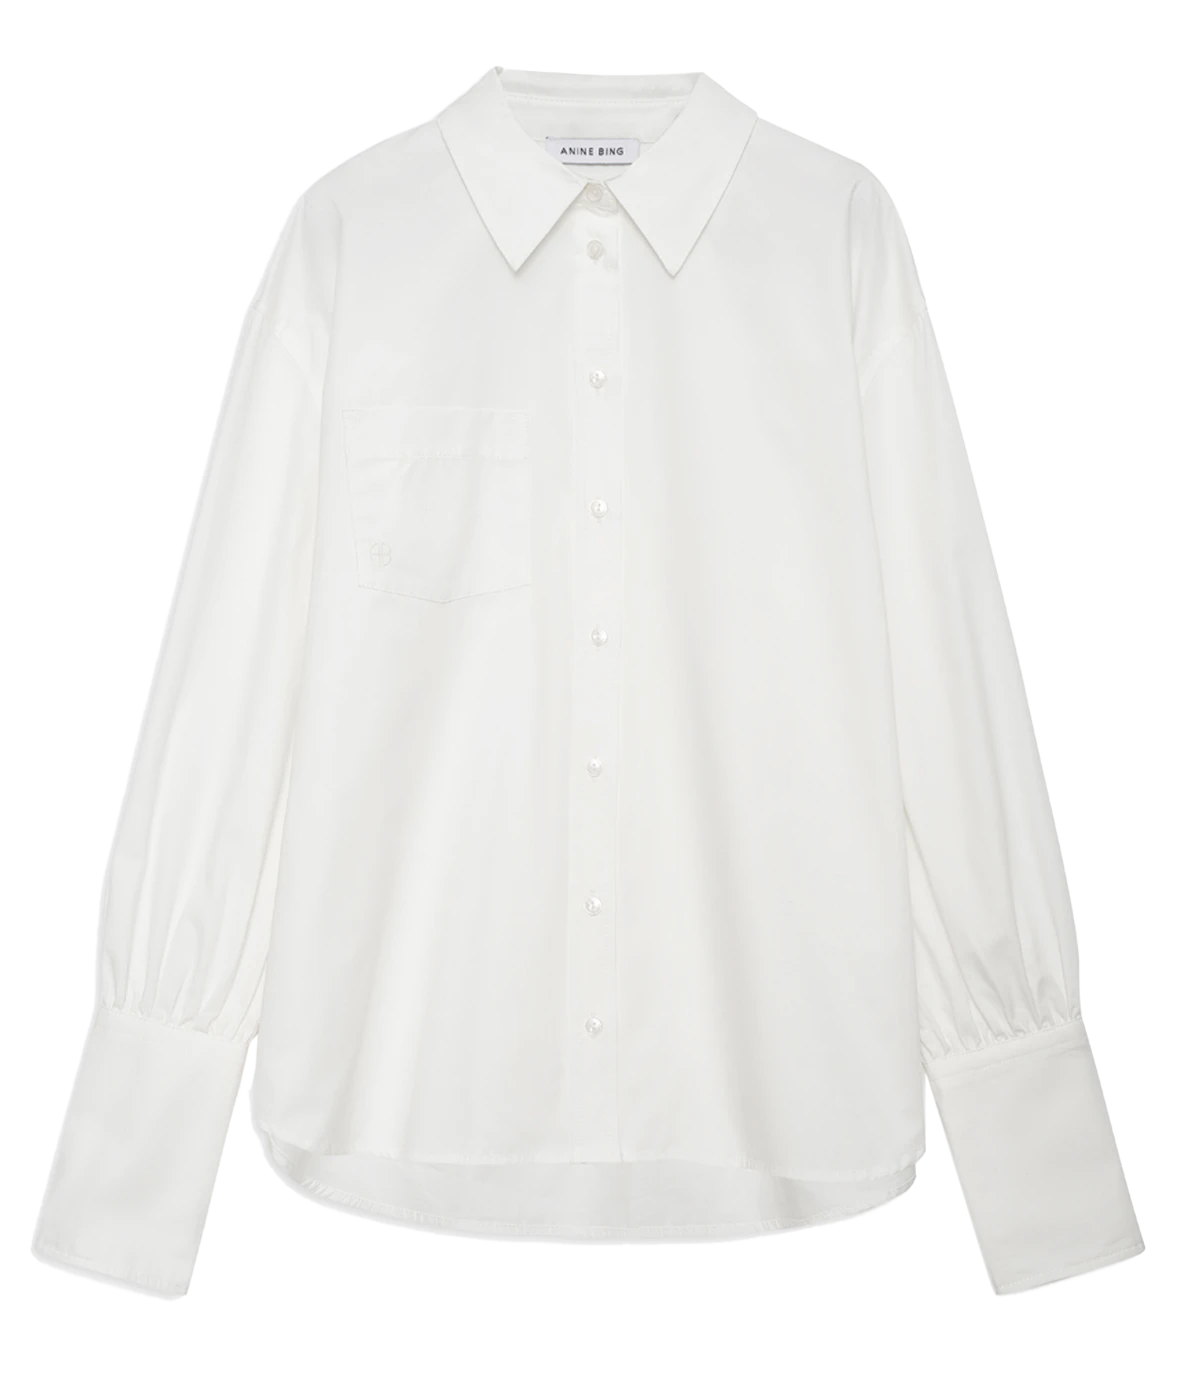 Maxine Shirt in White